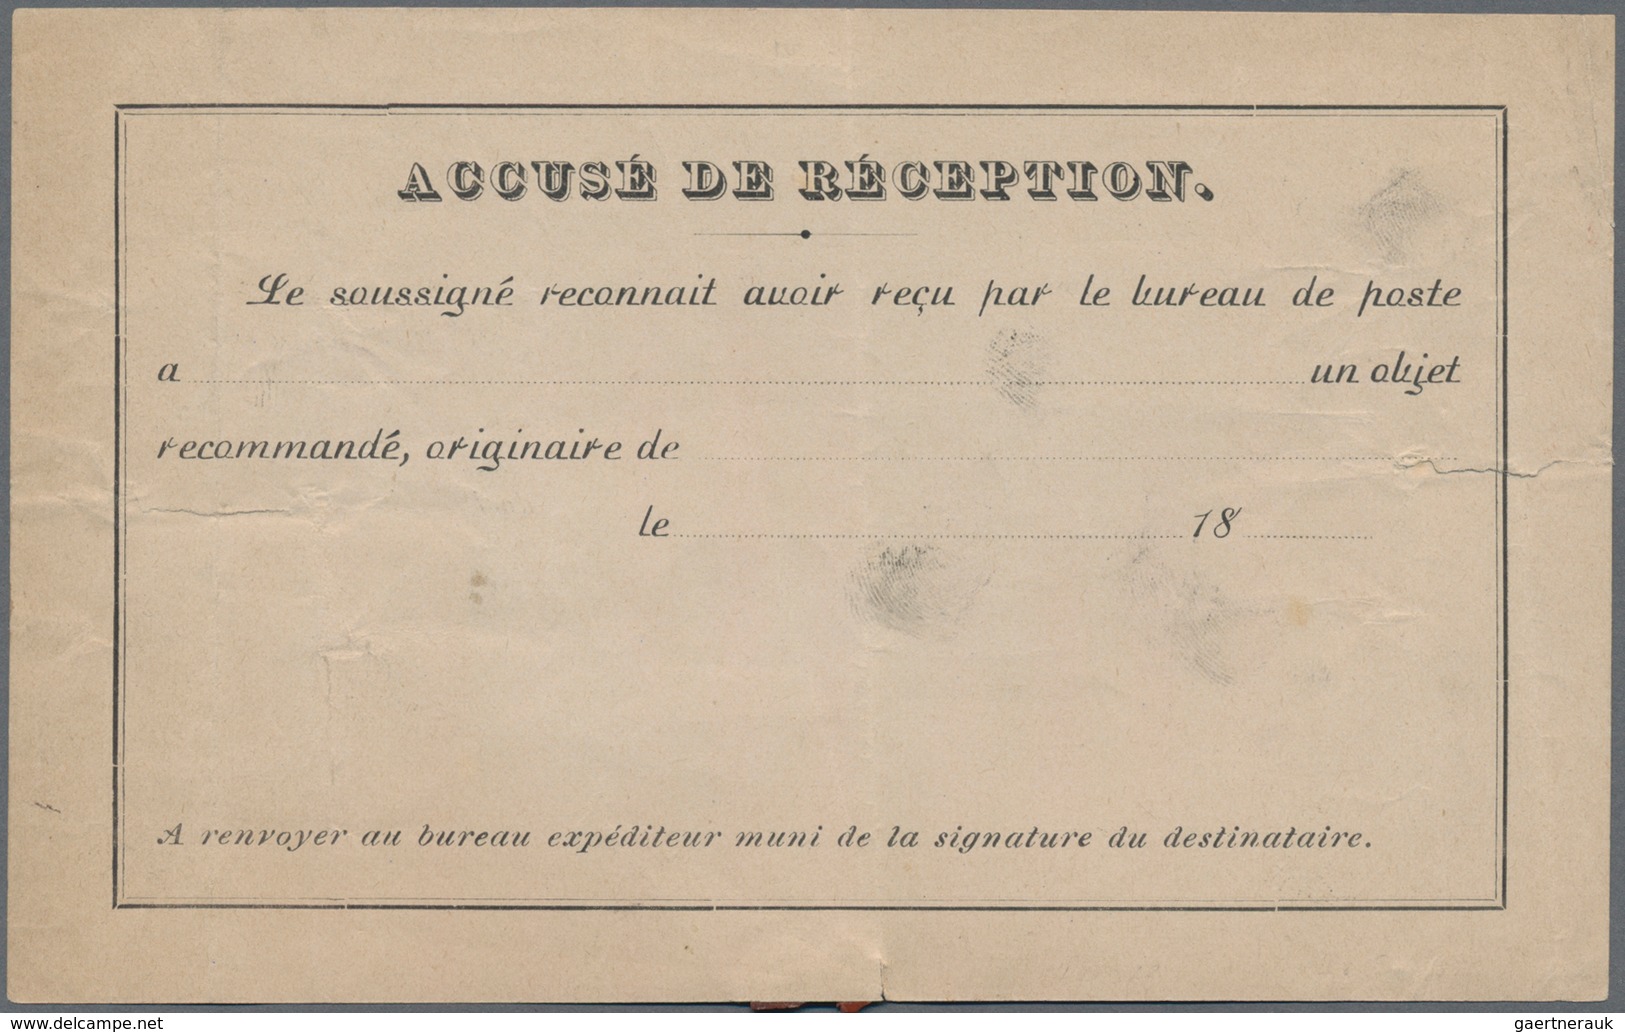 Brasilien: 1879, Avis De Reception, Dom Pedro 100r. Green Single Franking At Correct Rate On Receipt - Gebruikt